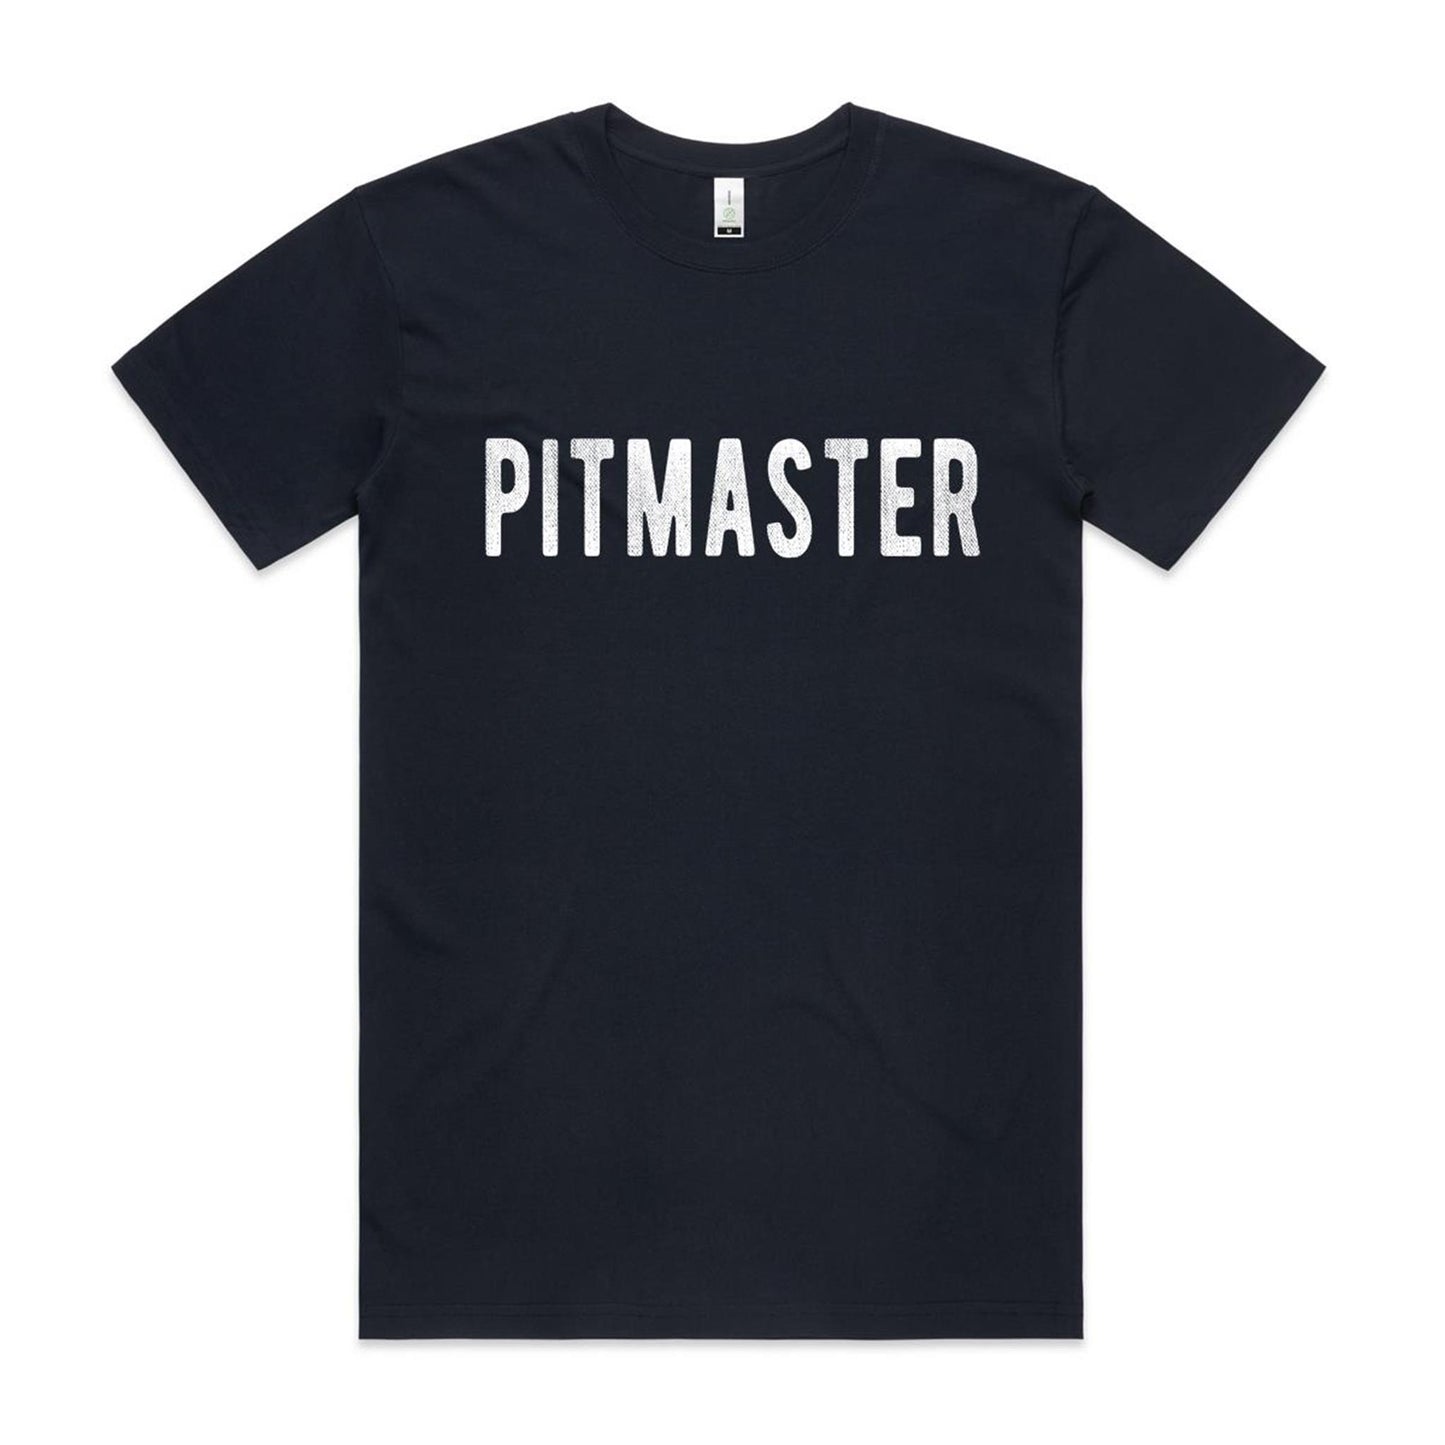 "Pitmaster" Adult T-Shirt